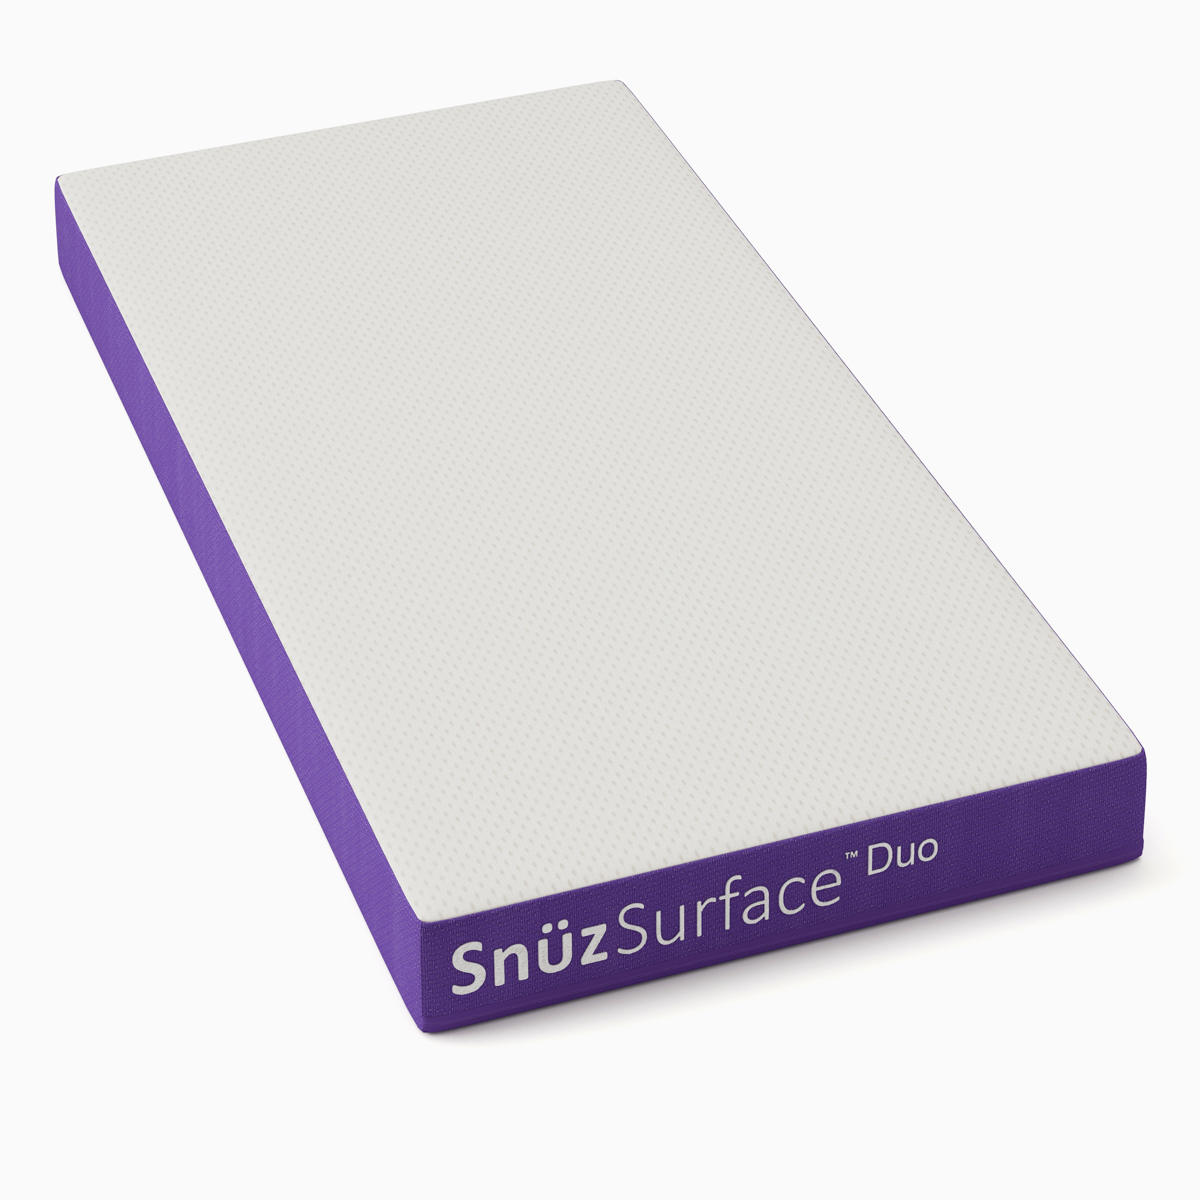 Snüz Surface Duo Matras - Kot (68x117 cm.)